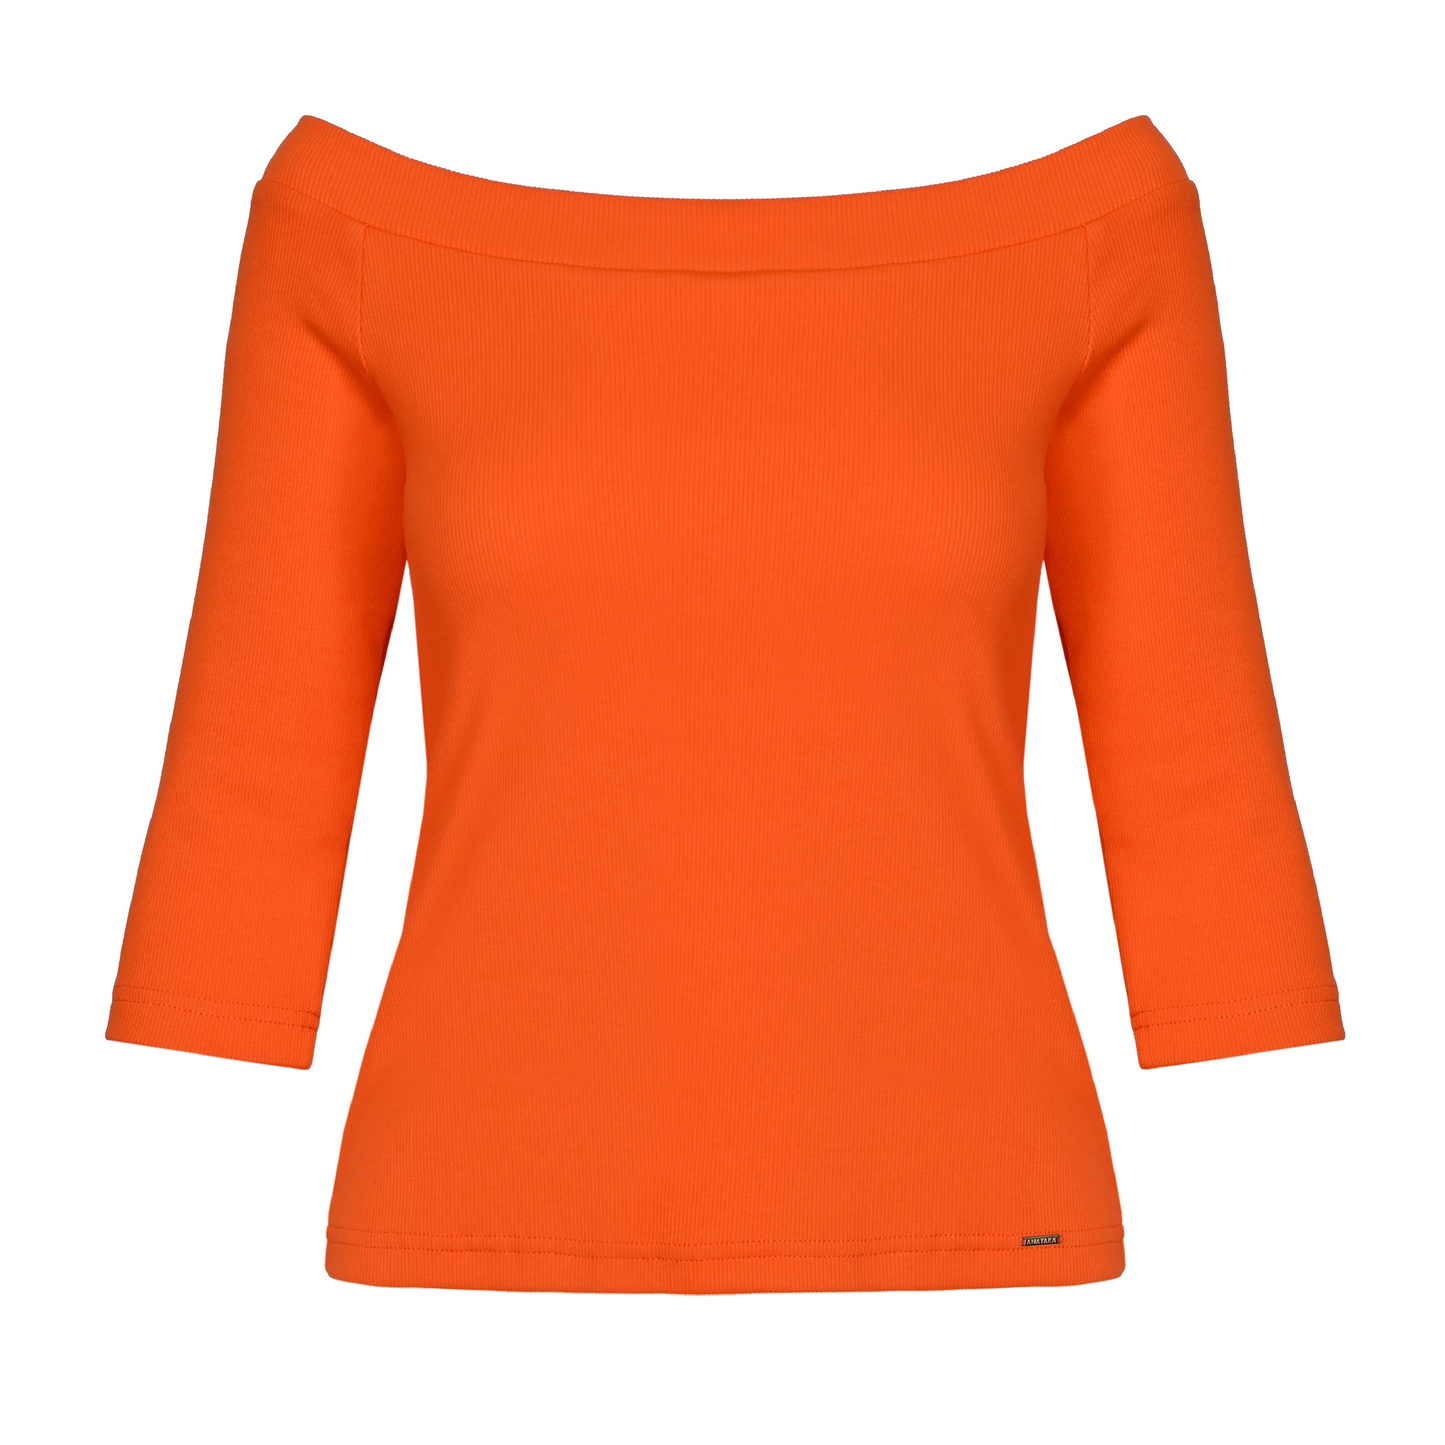 Tori Orange blouse